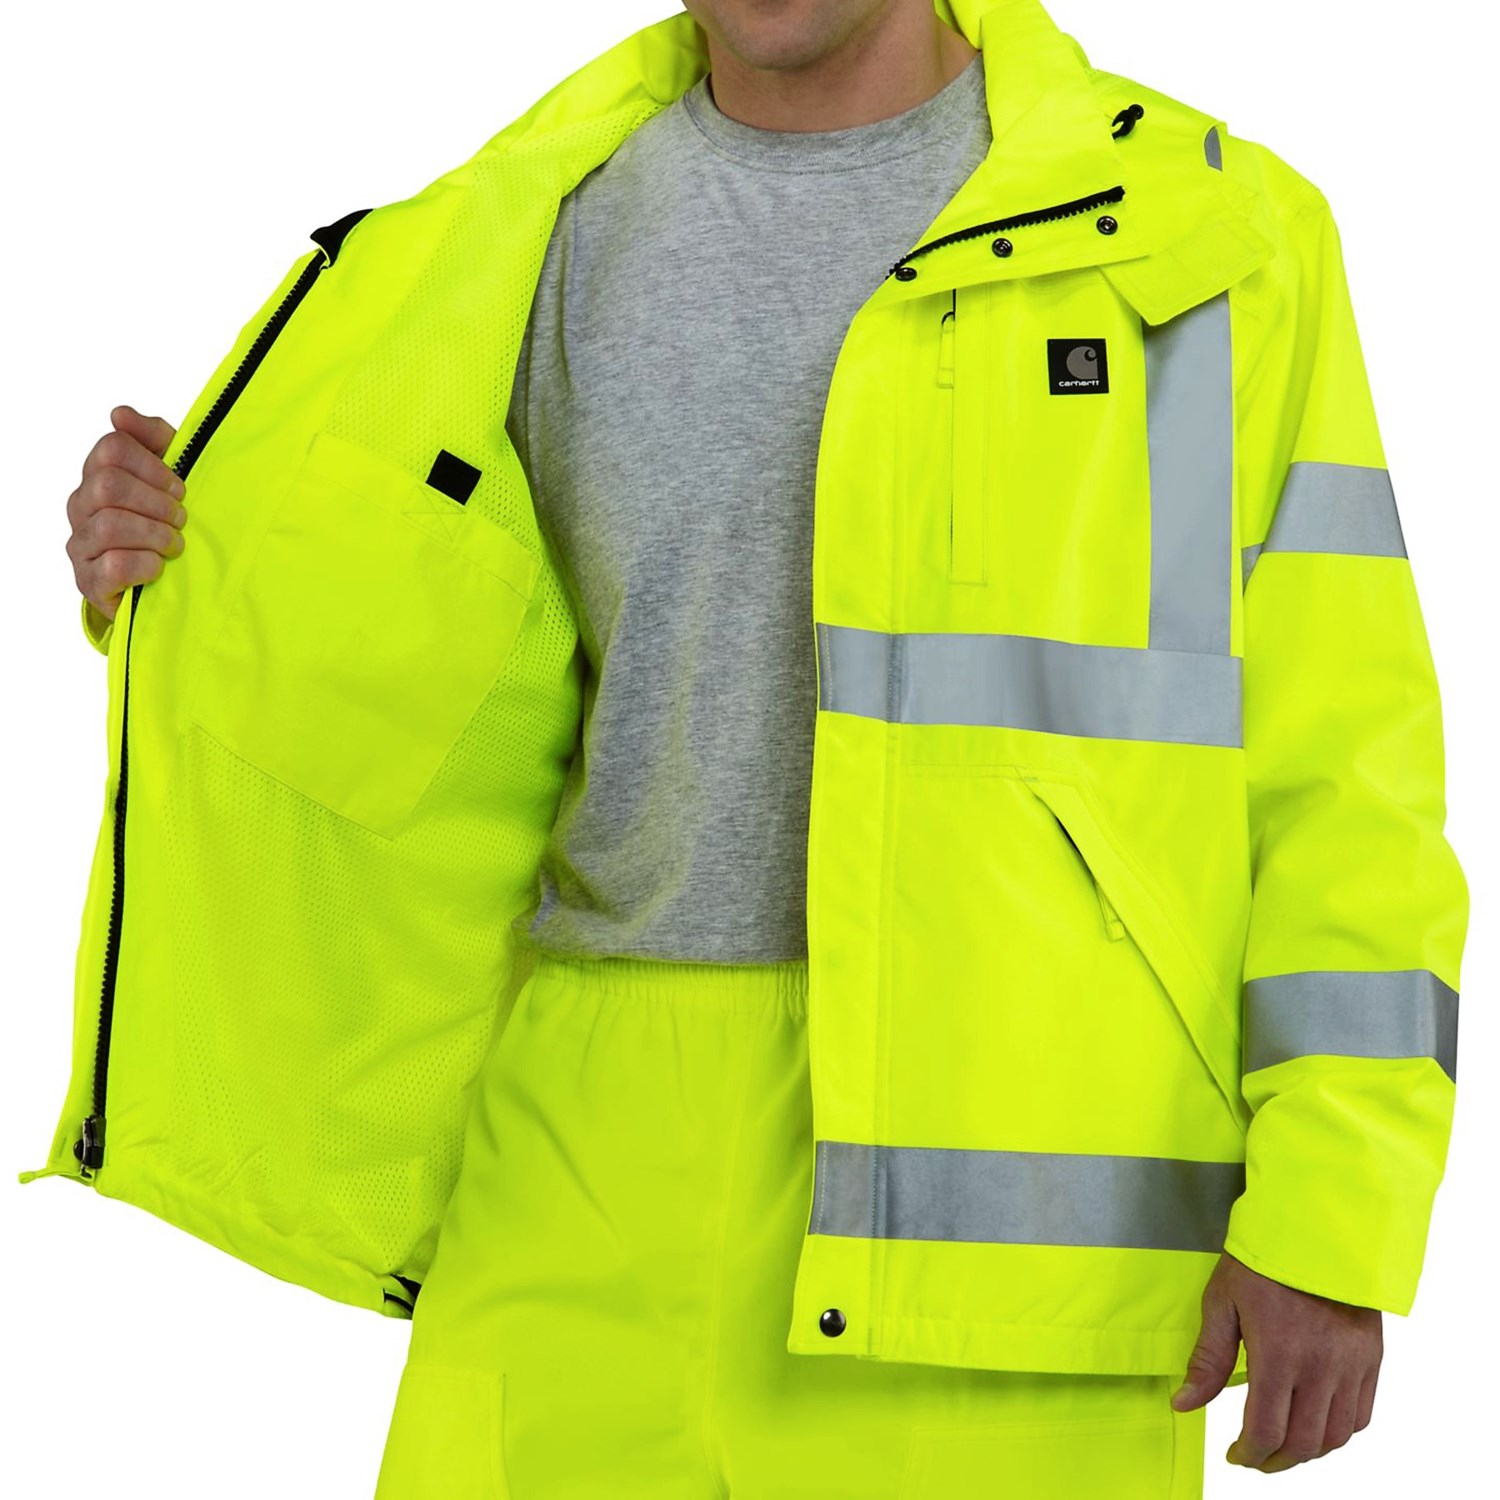 Carhartt High-Visibility Class 3 Jacket (For Men) 101XD